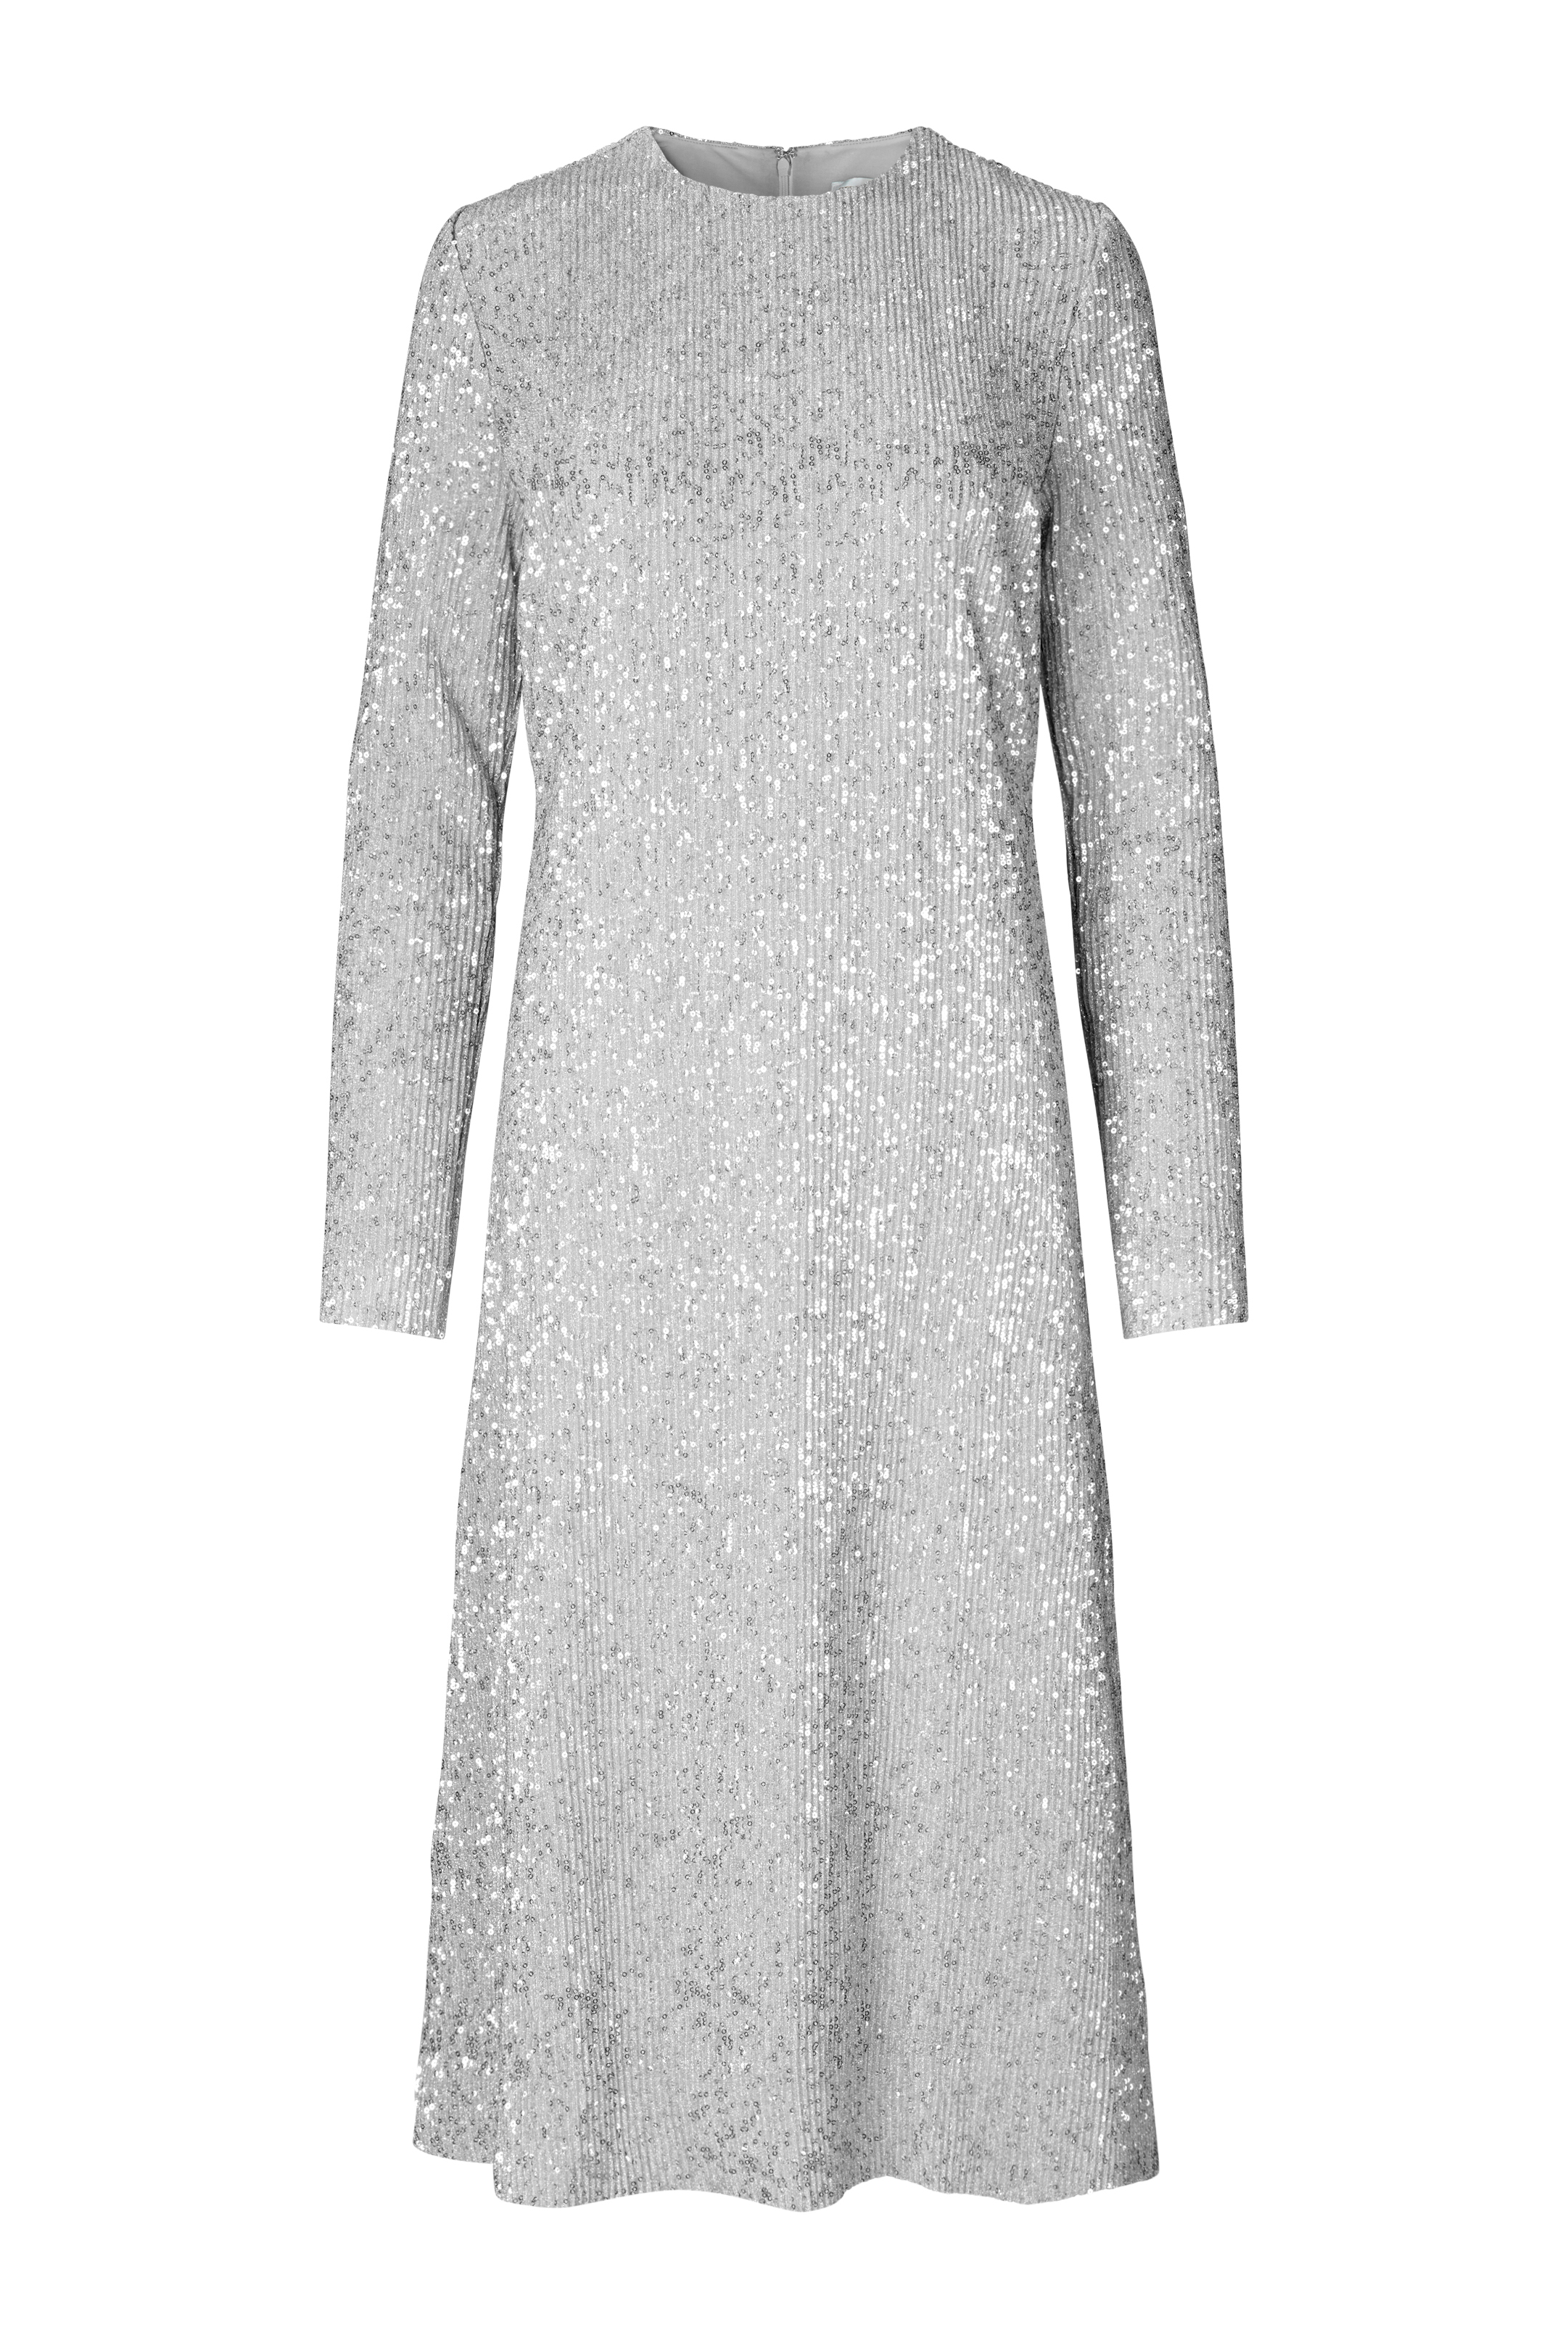 Stine Goya Celsia Dress - Silver